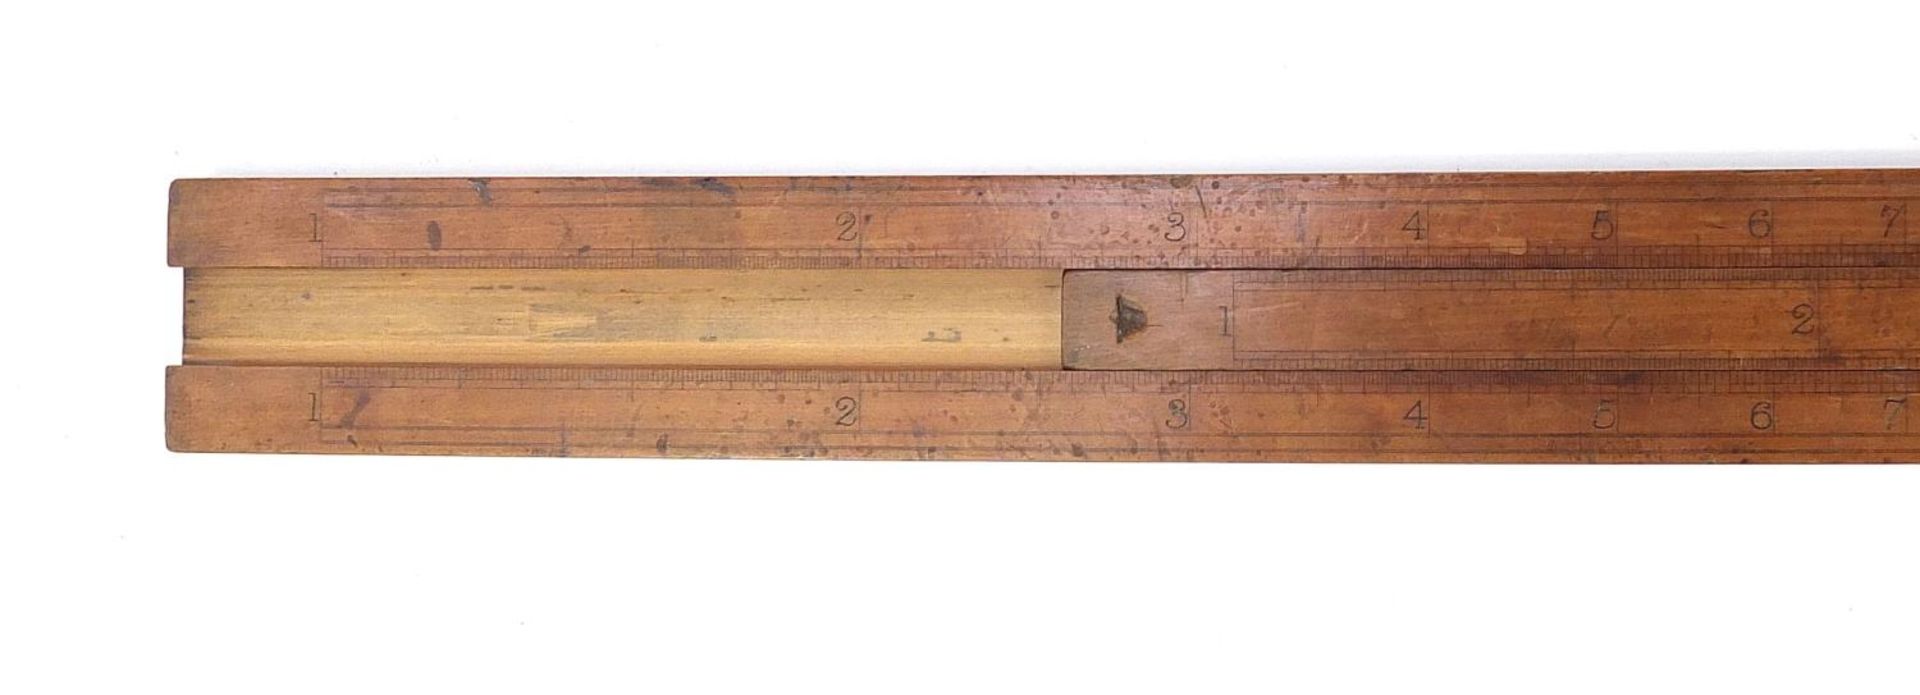 Antique Stanley boxwood three foot sliding rule impressed Stanley Great Turnstile Holborn London, - Image 5 of 14